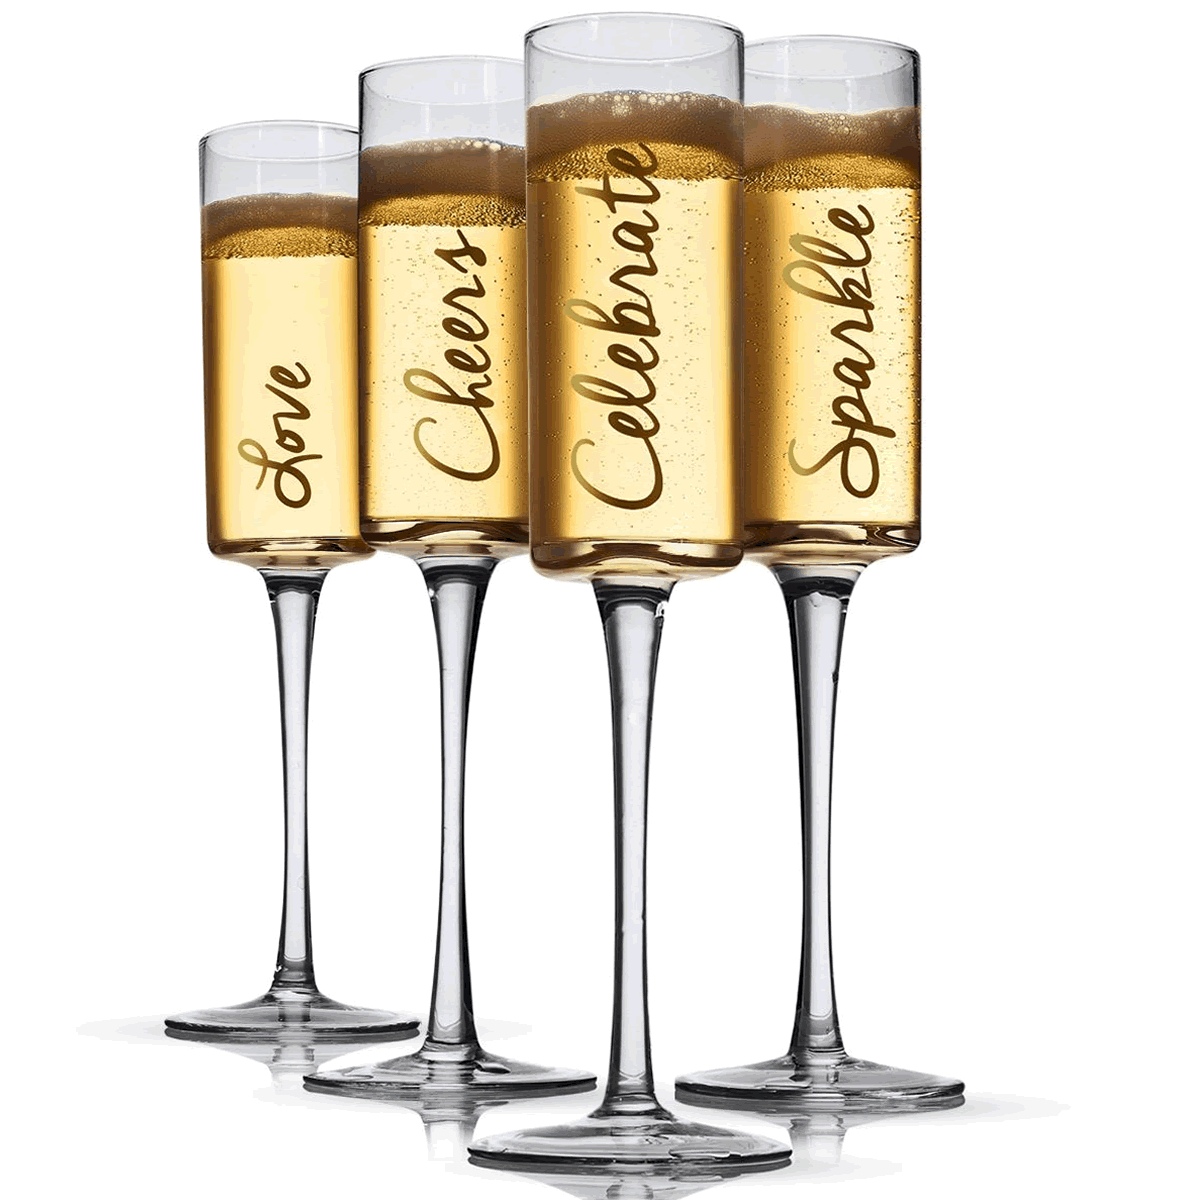 4 champagne flutes